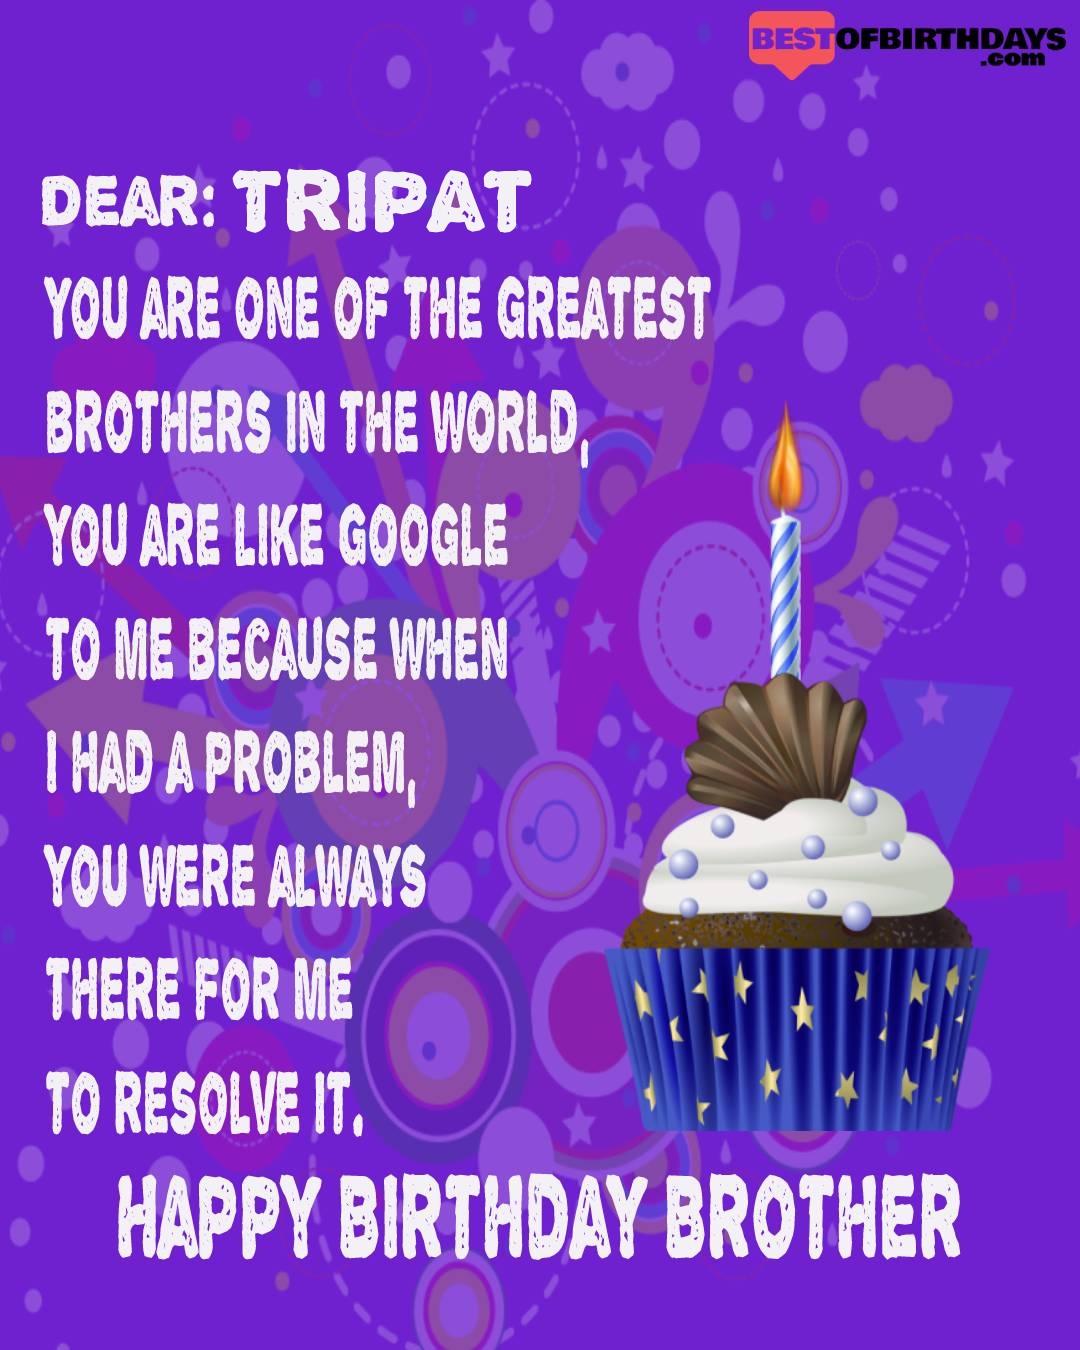 Happy birthday tripat bhai brother bro